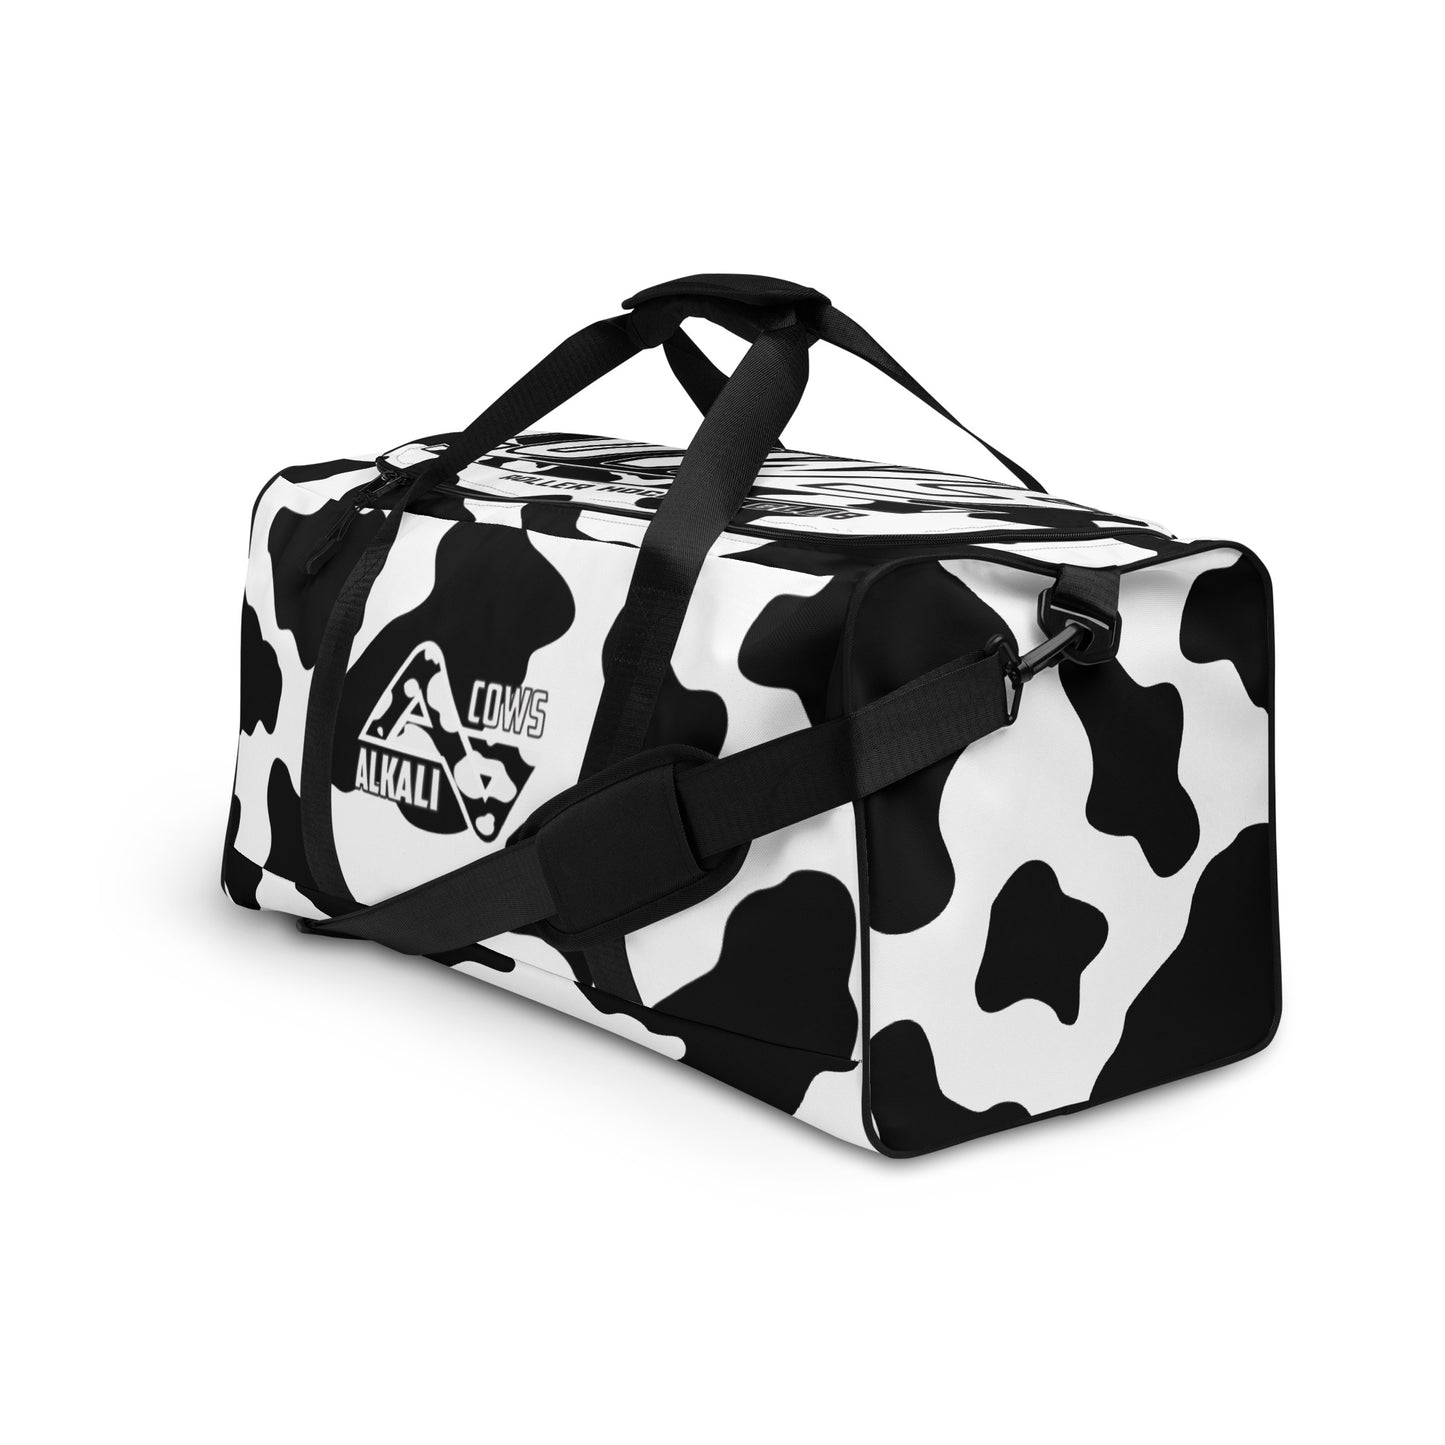 Cows Duffle bag